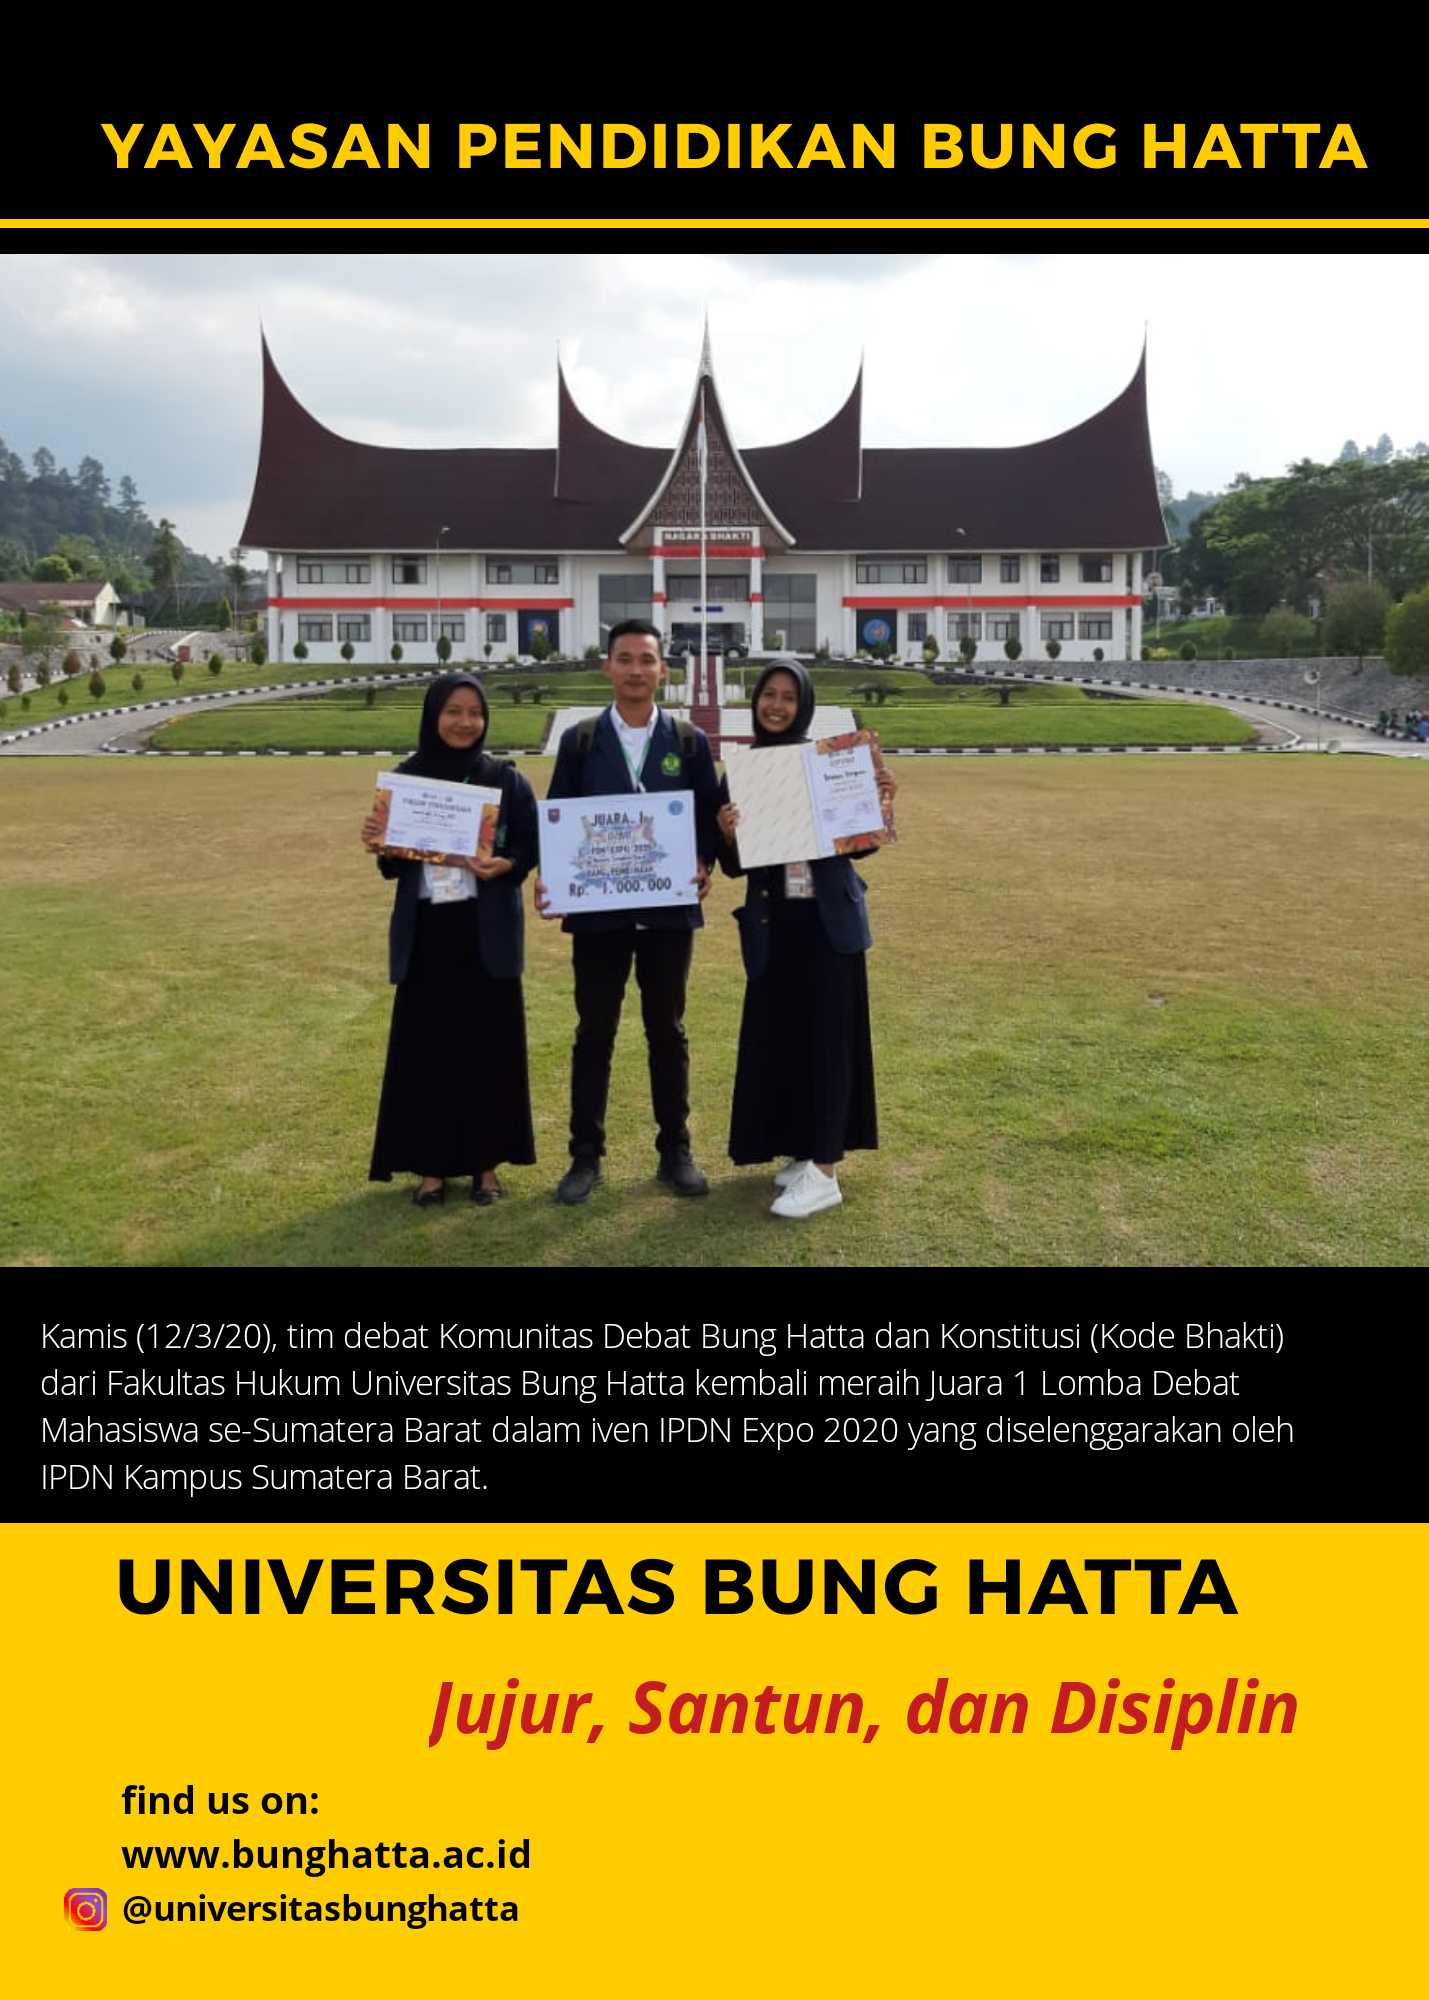 Kode Bhakti Fakultas Hukum Universitas Bung Hatta Raih Juara I Lomba Debat se-Sumatra Barat